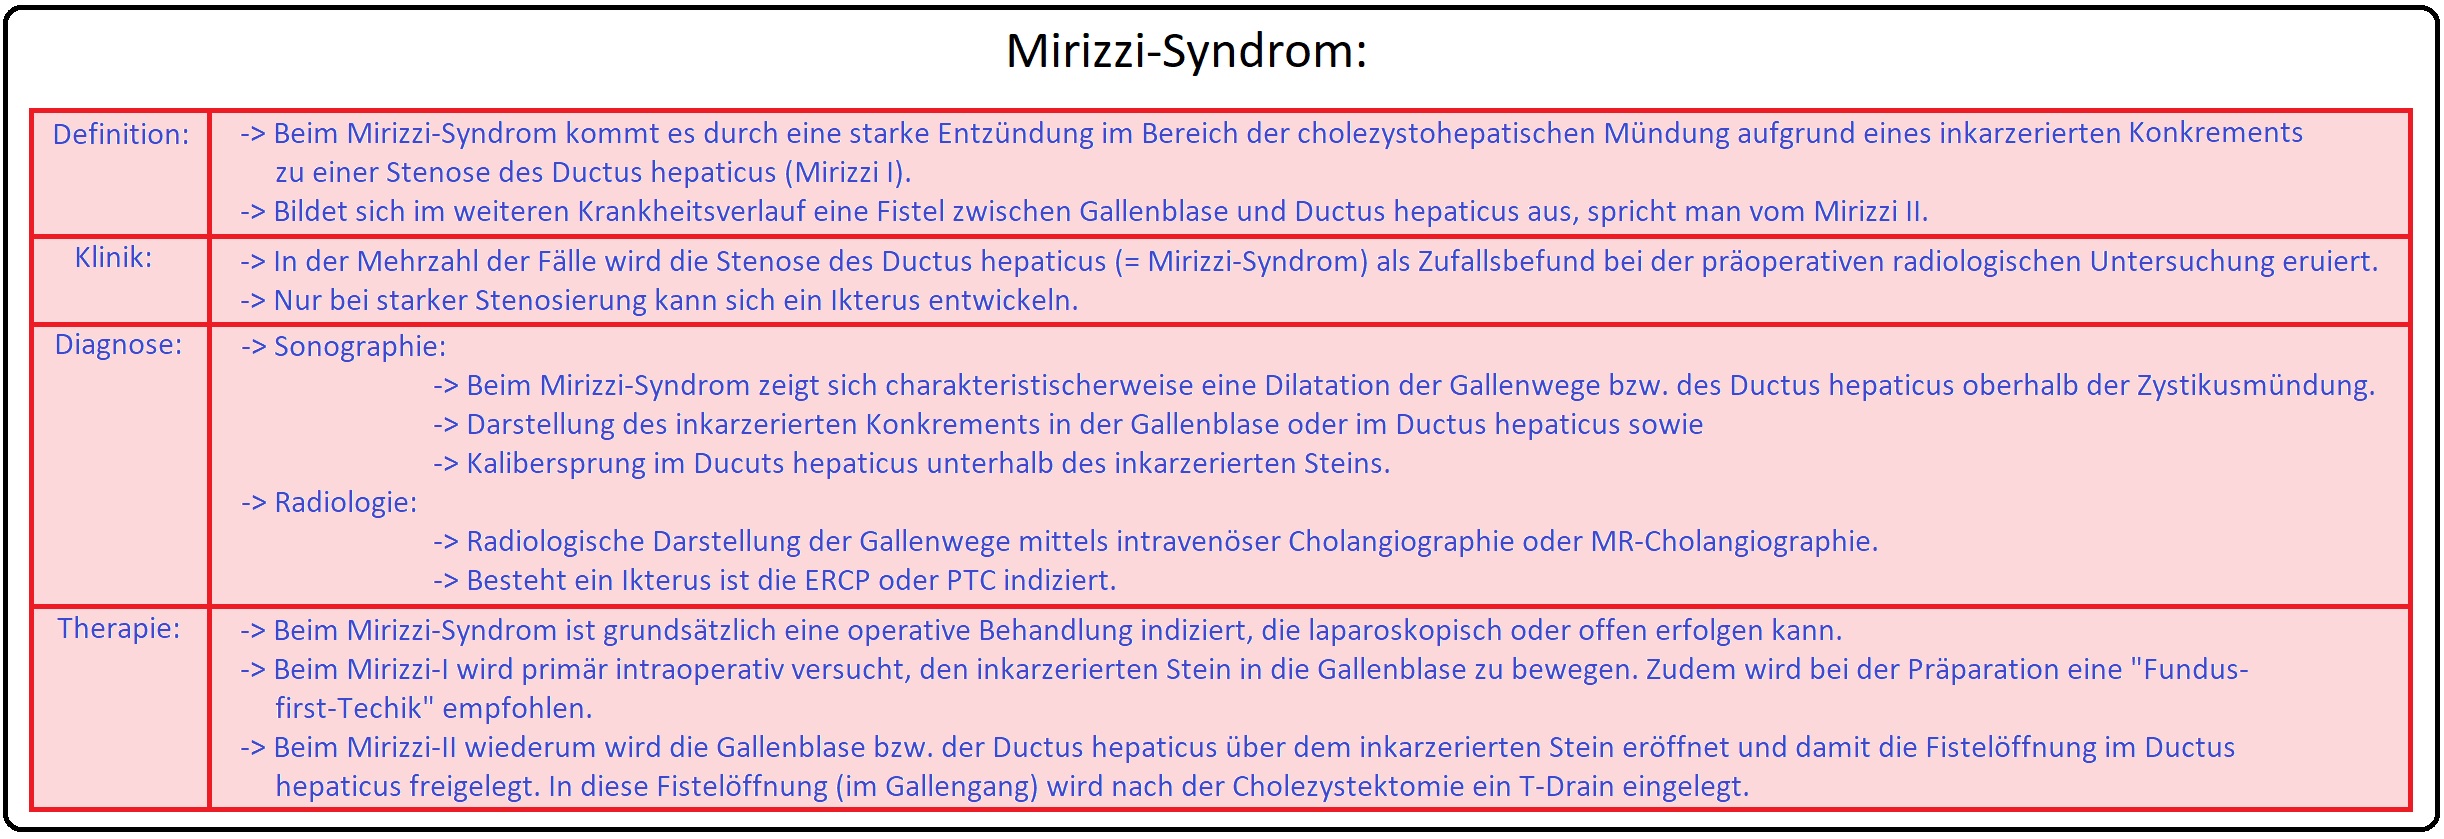 761 Mirizzi Syndrom